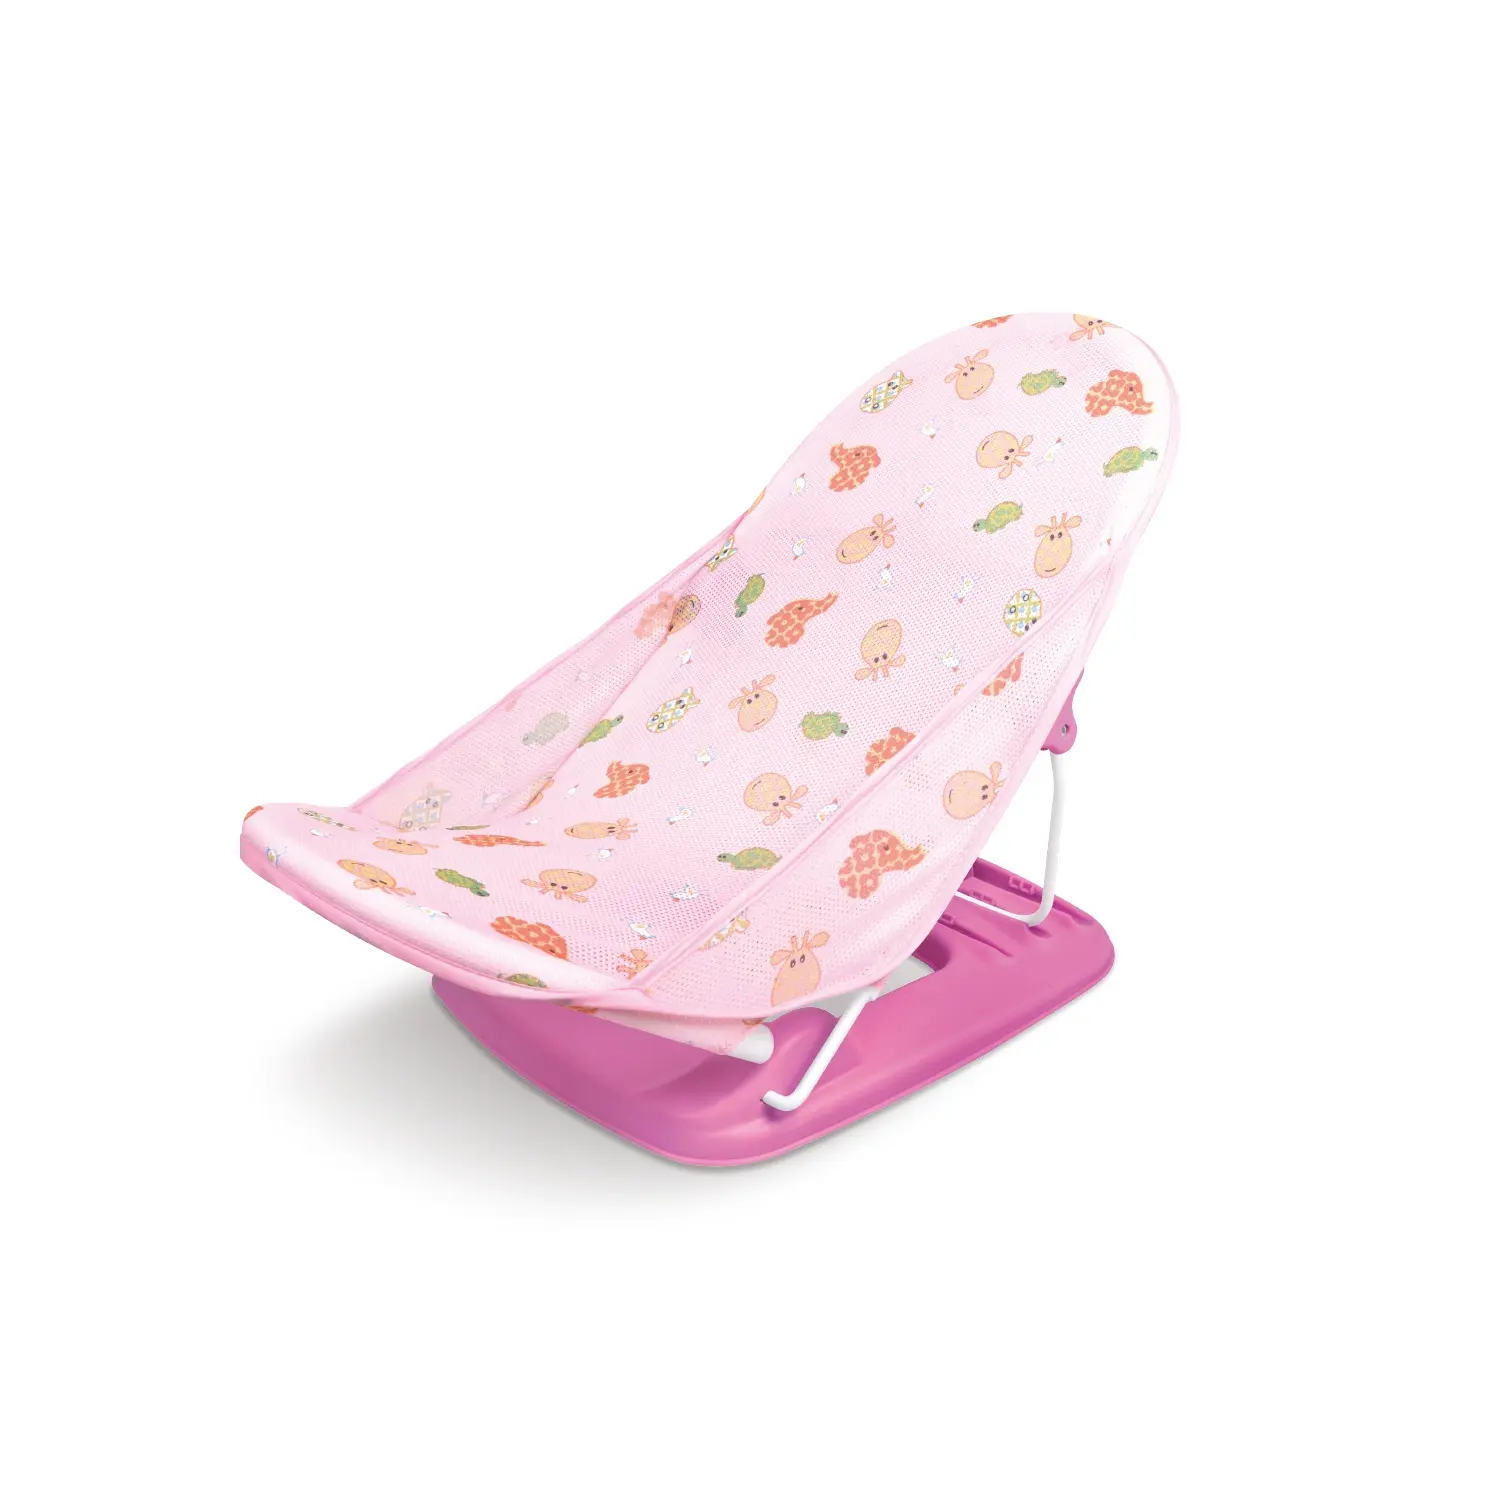 Summer Infant Deluxe Baby Bather kids shower toys Bathtub babies bath chair infant bath time bath seats